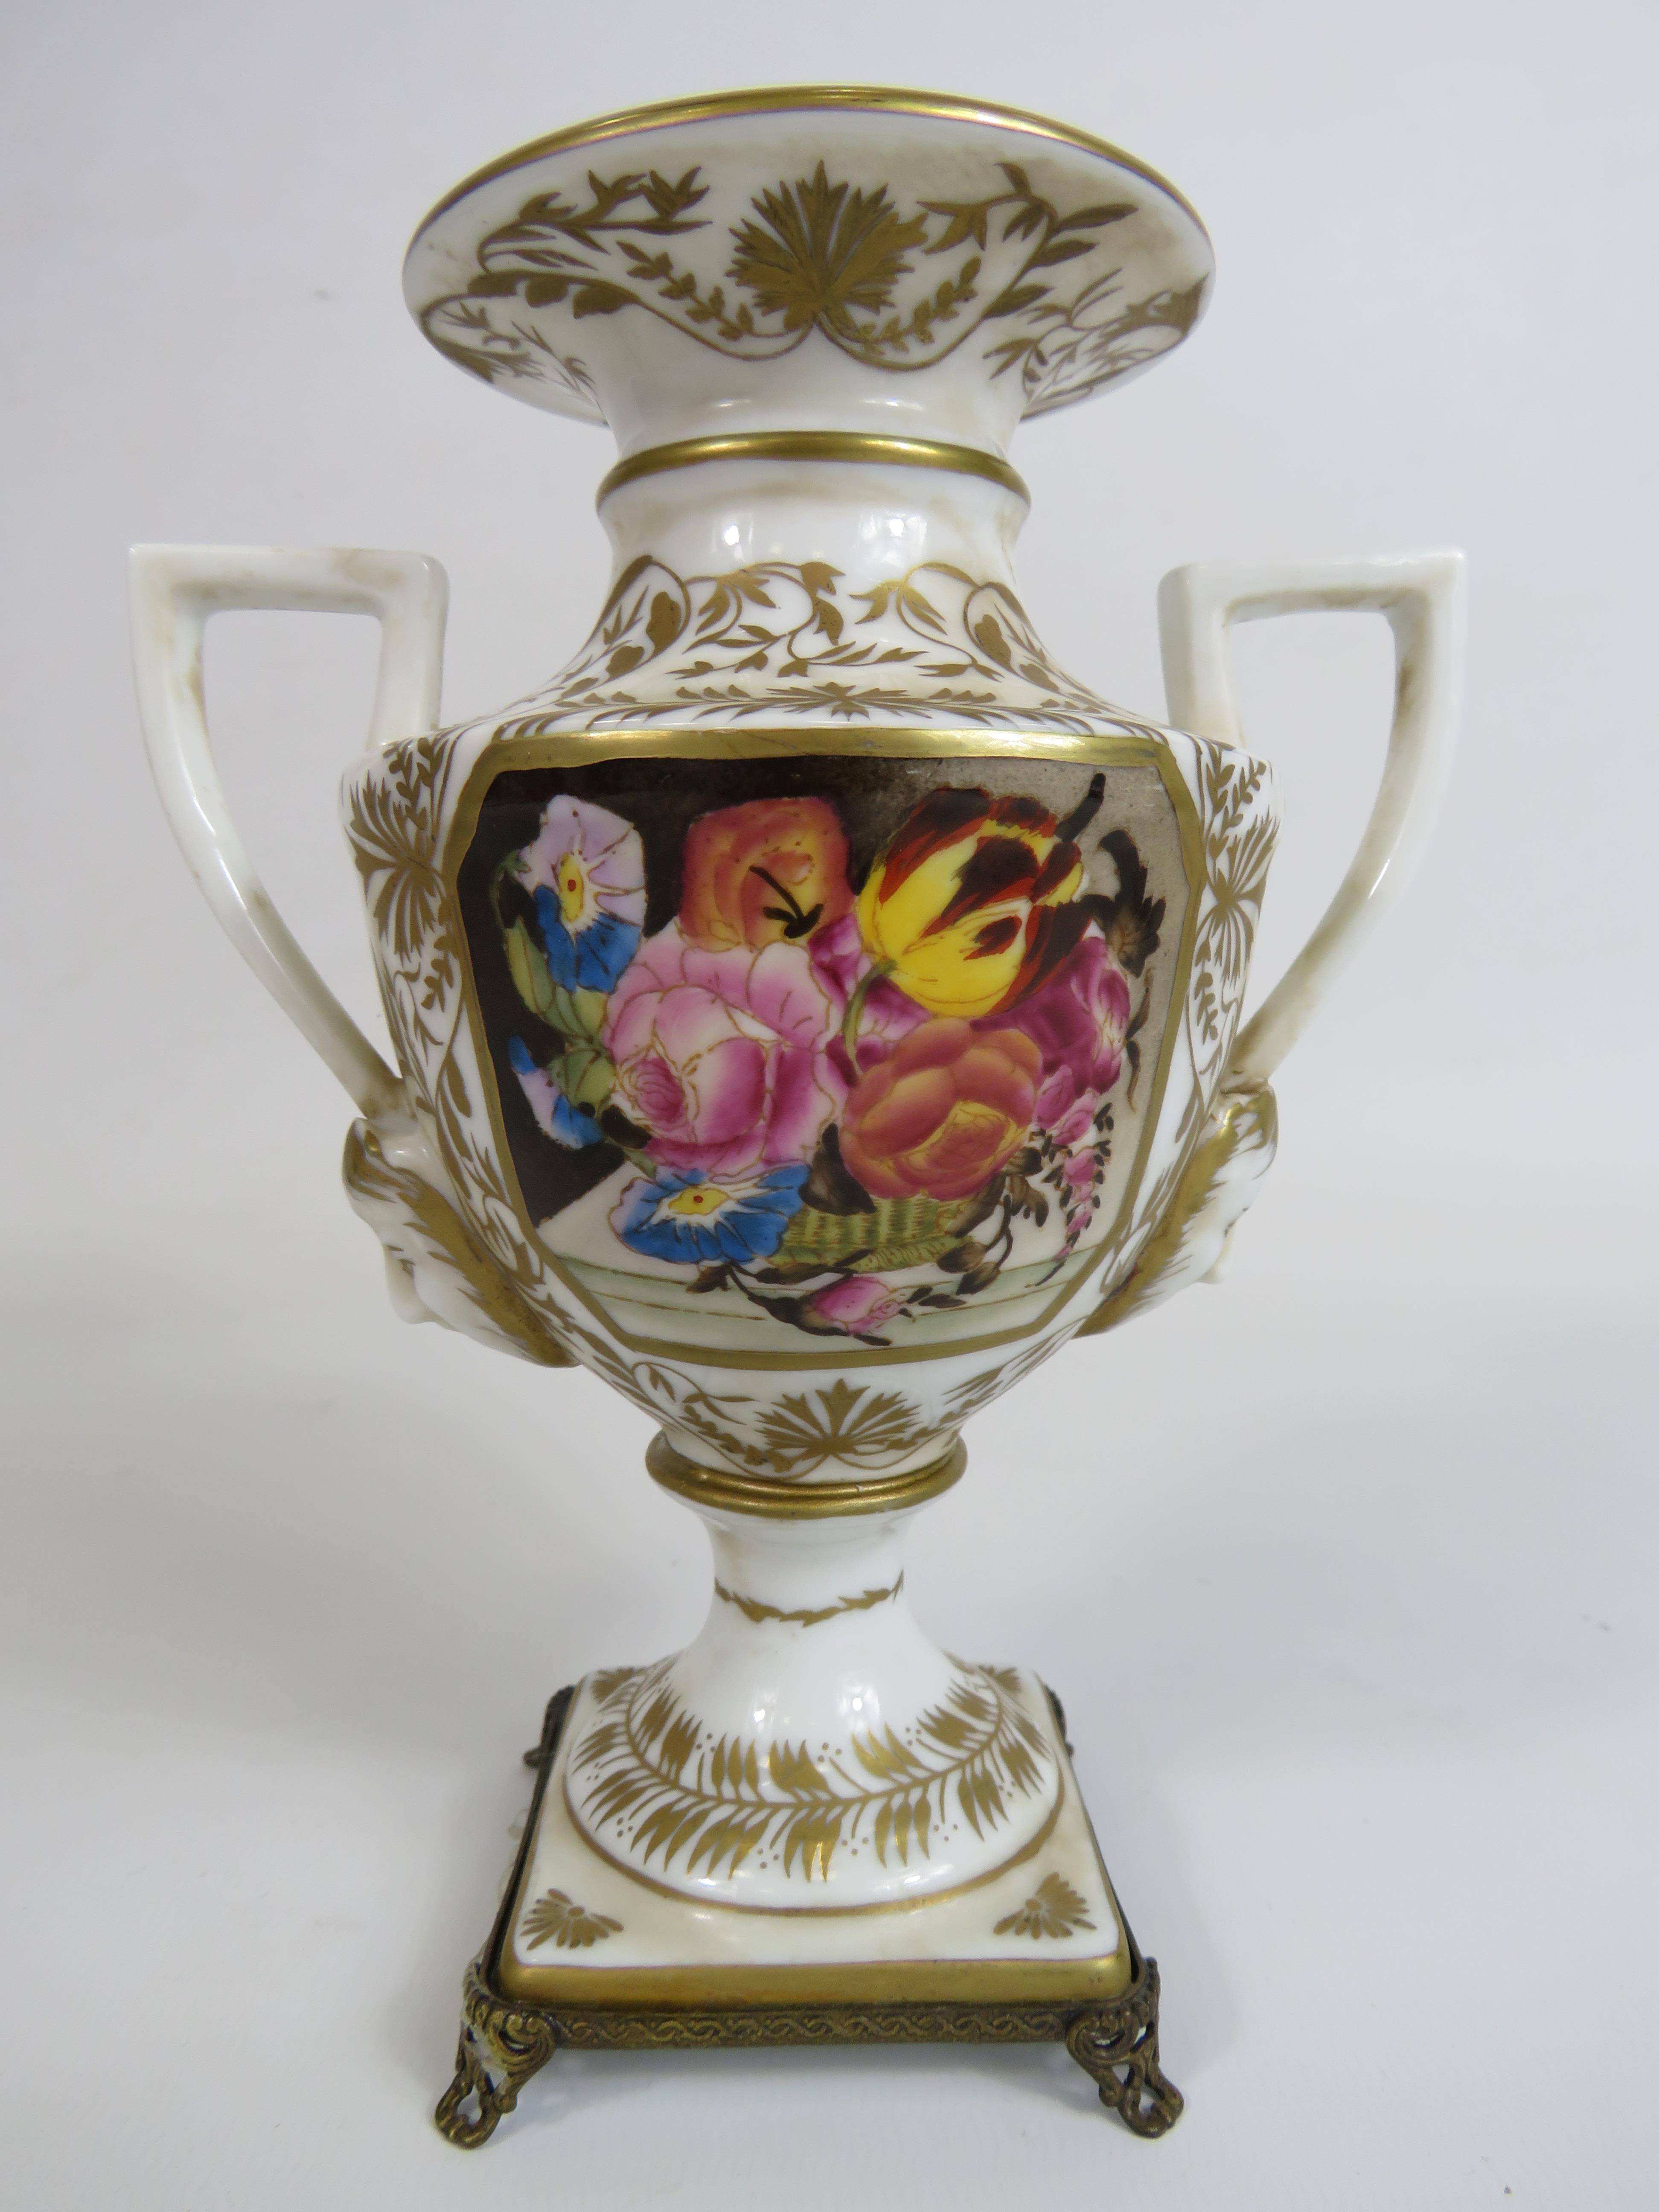 Meissen style twin handle vase sitting on brass feet, 16cm tall.